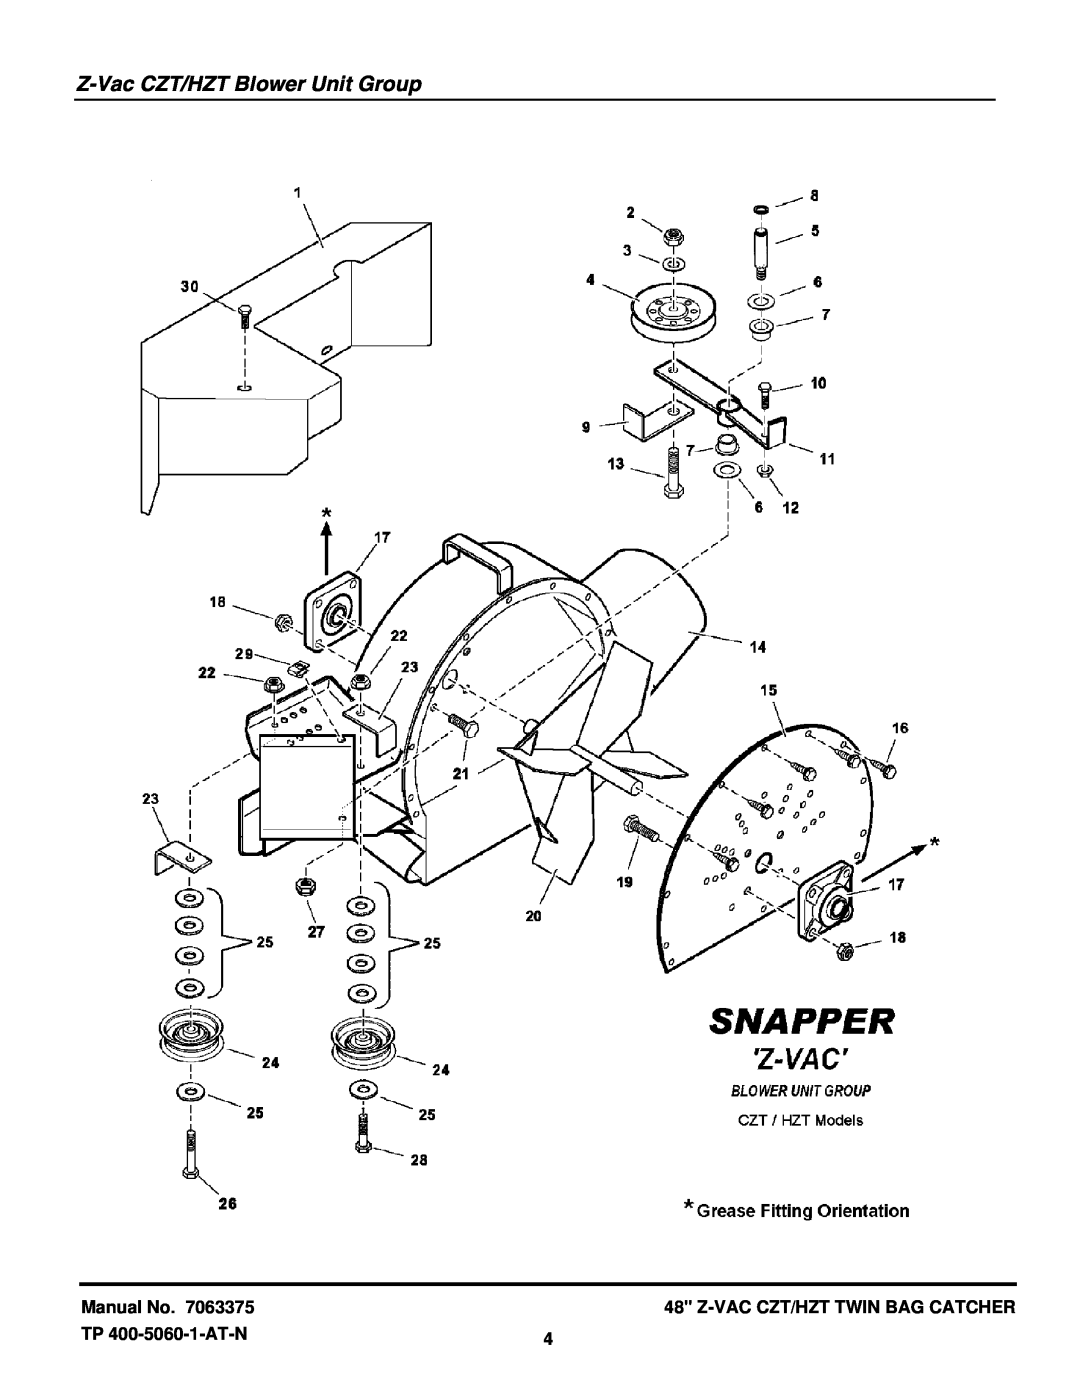 Snapper 7063375 manual Z-Vac CZT/HZT Blower Unit Group, Manual No, Z-Vac Czt/Hzt Twin Bag Catcher, TP 400-5060-1-AT-N 